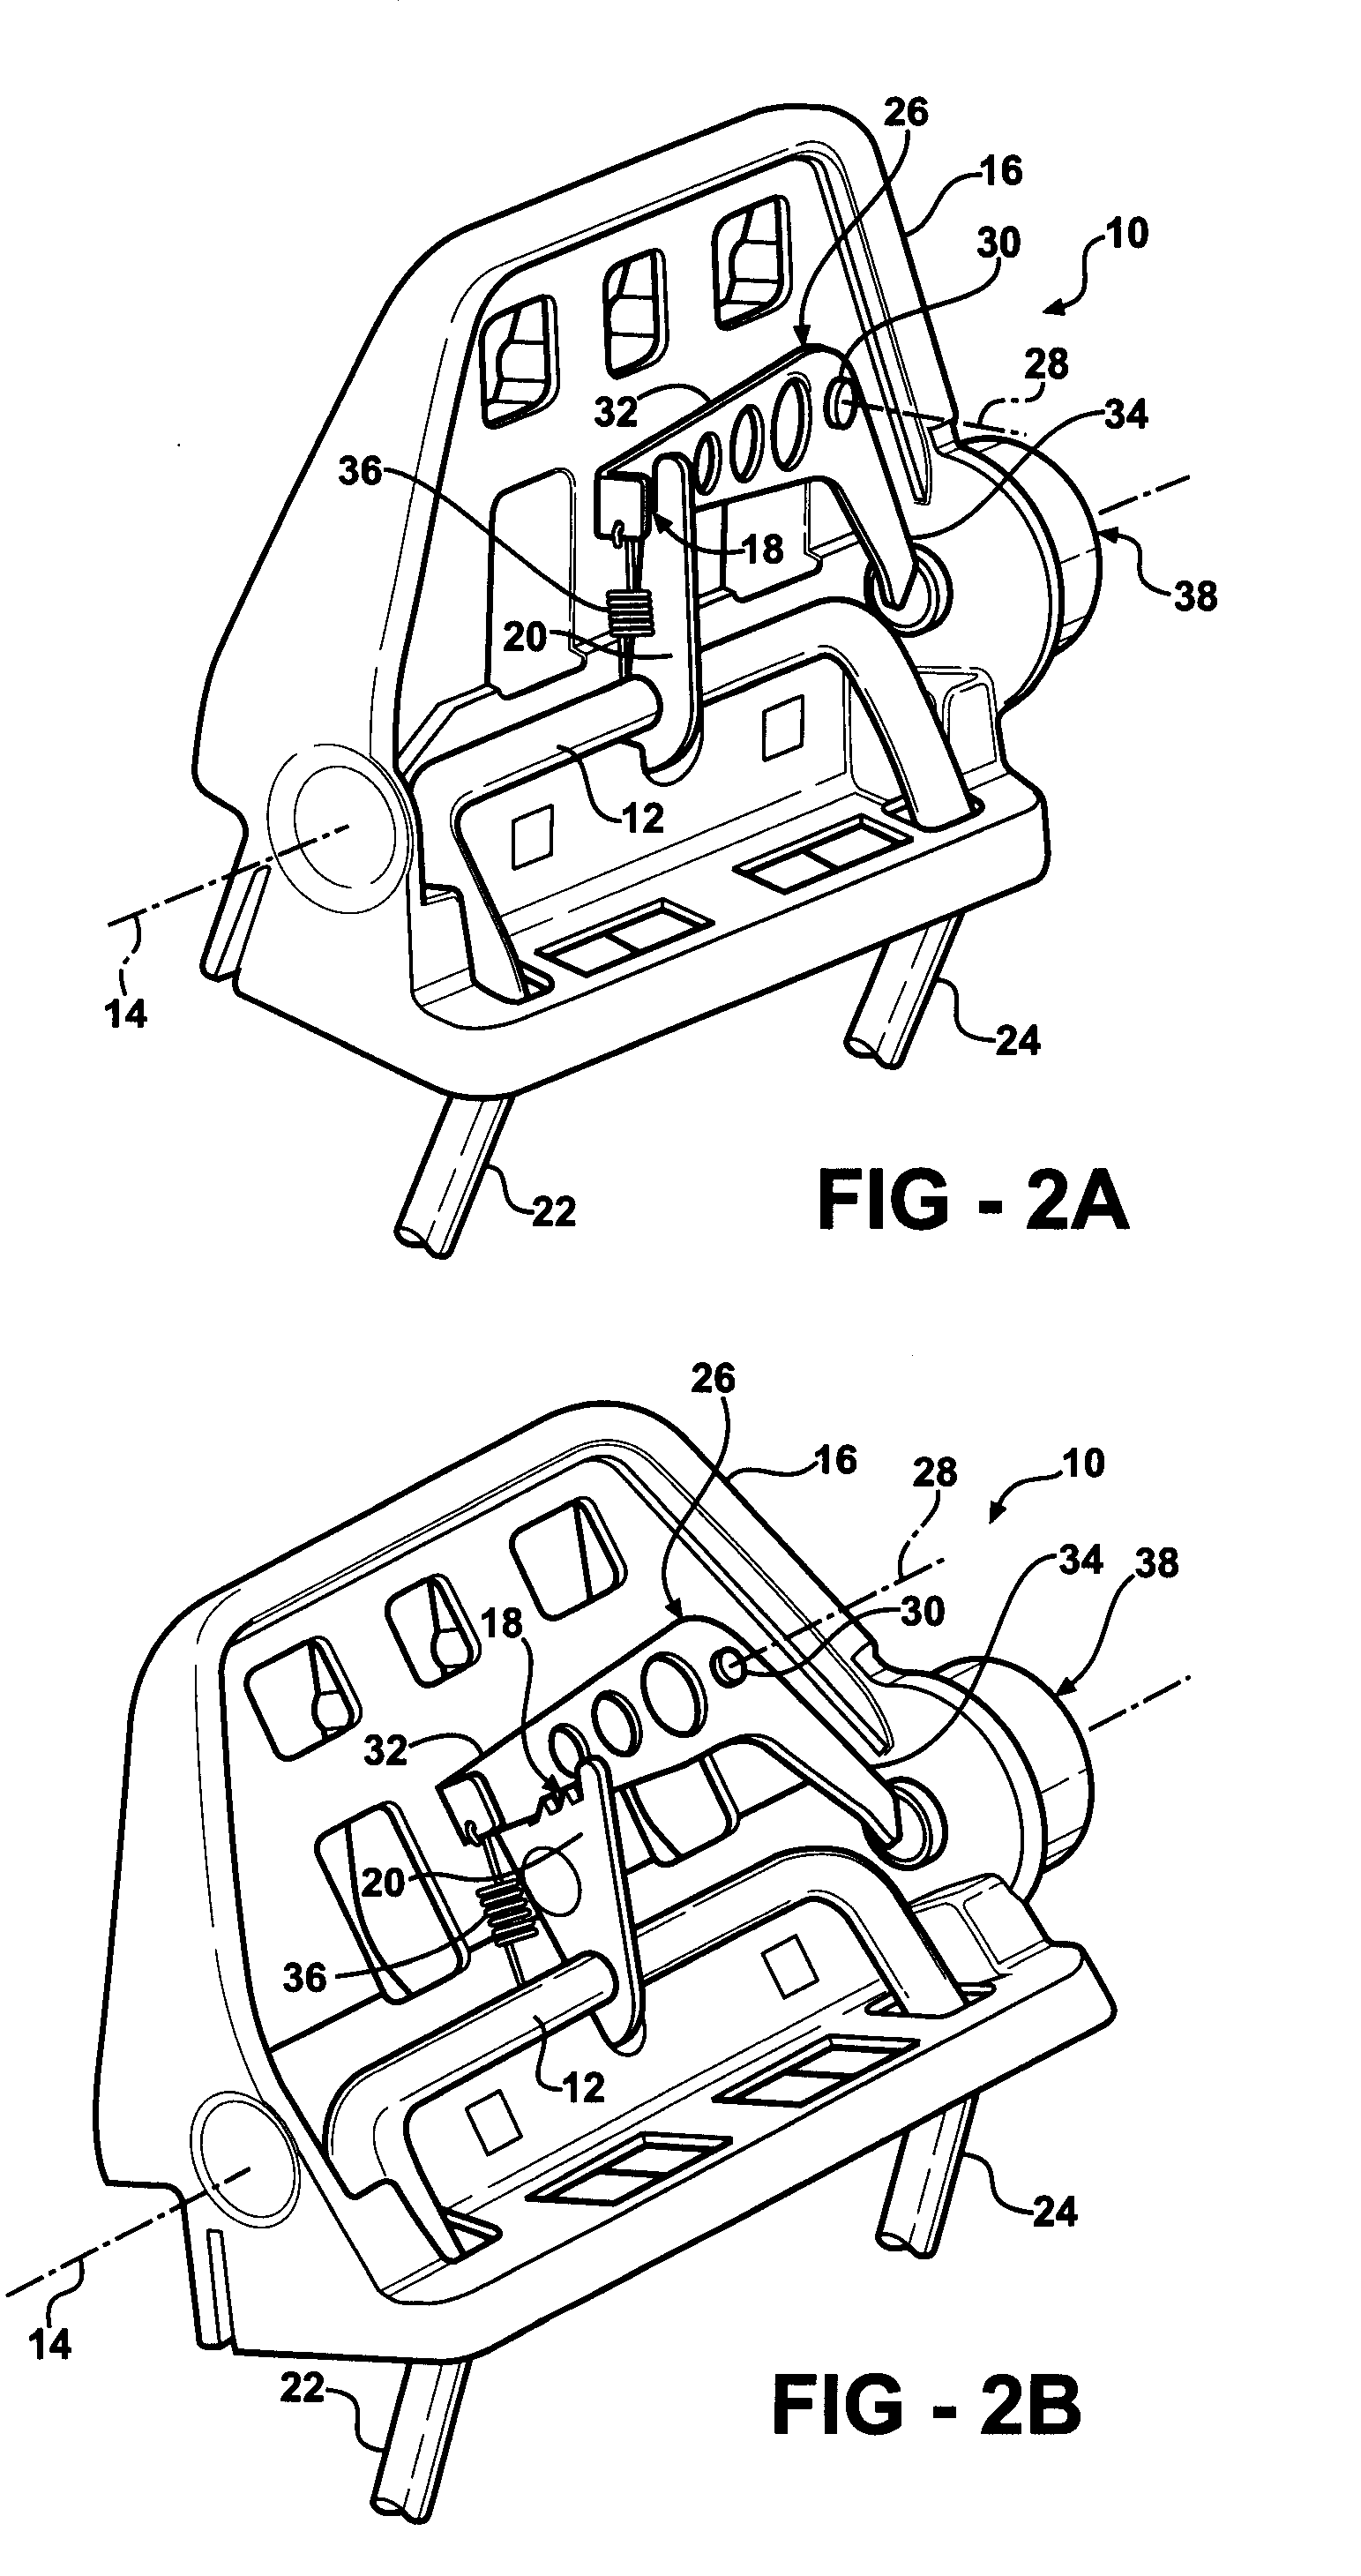 Articulating headrest assembly